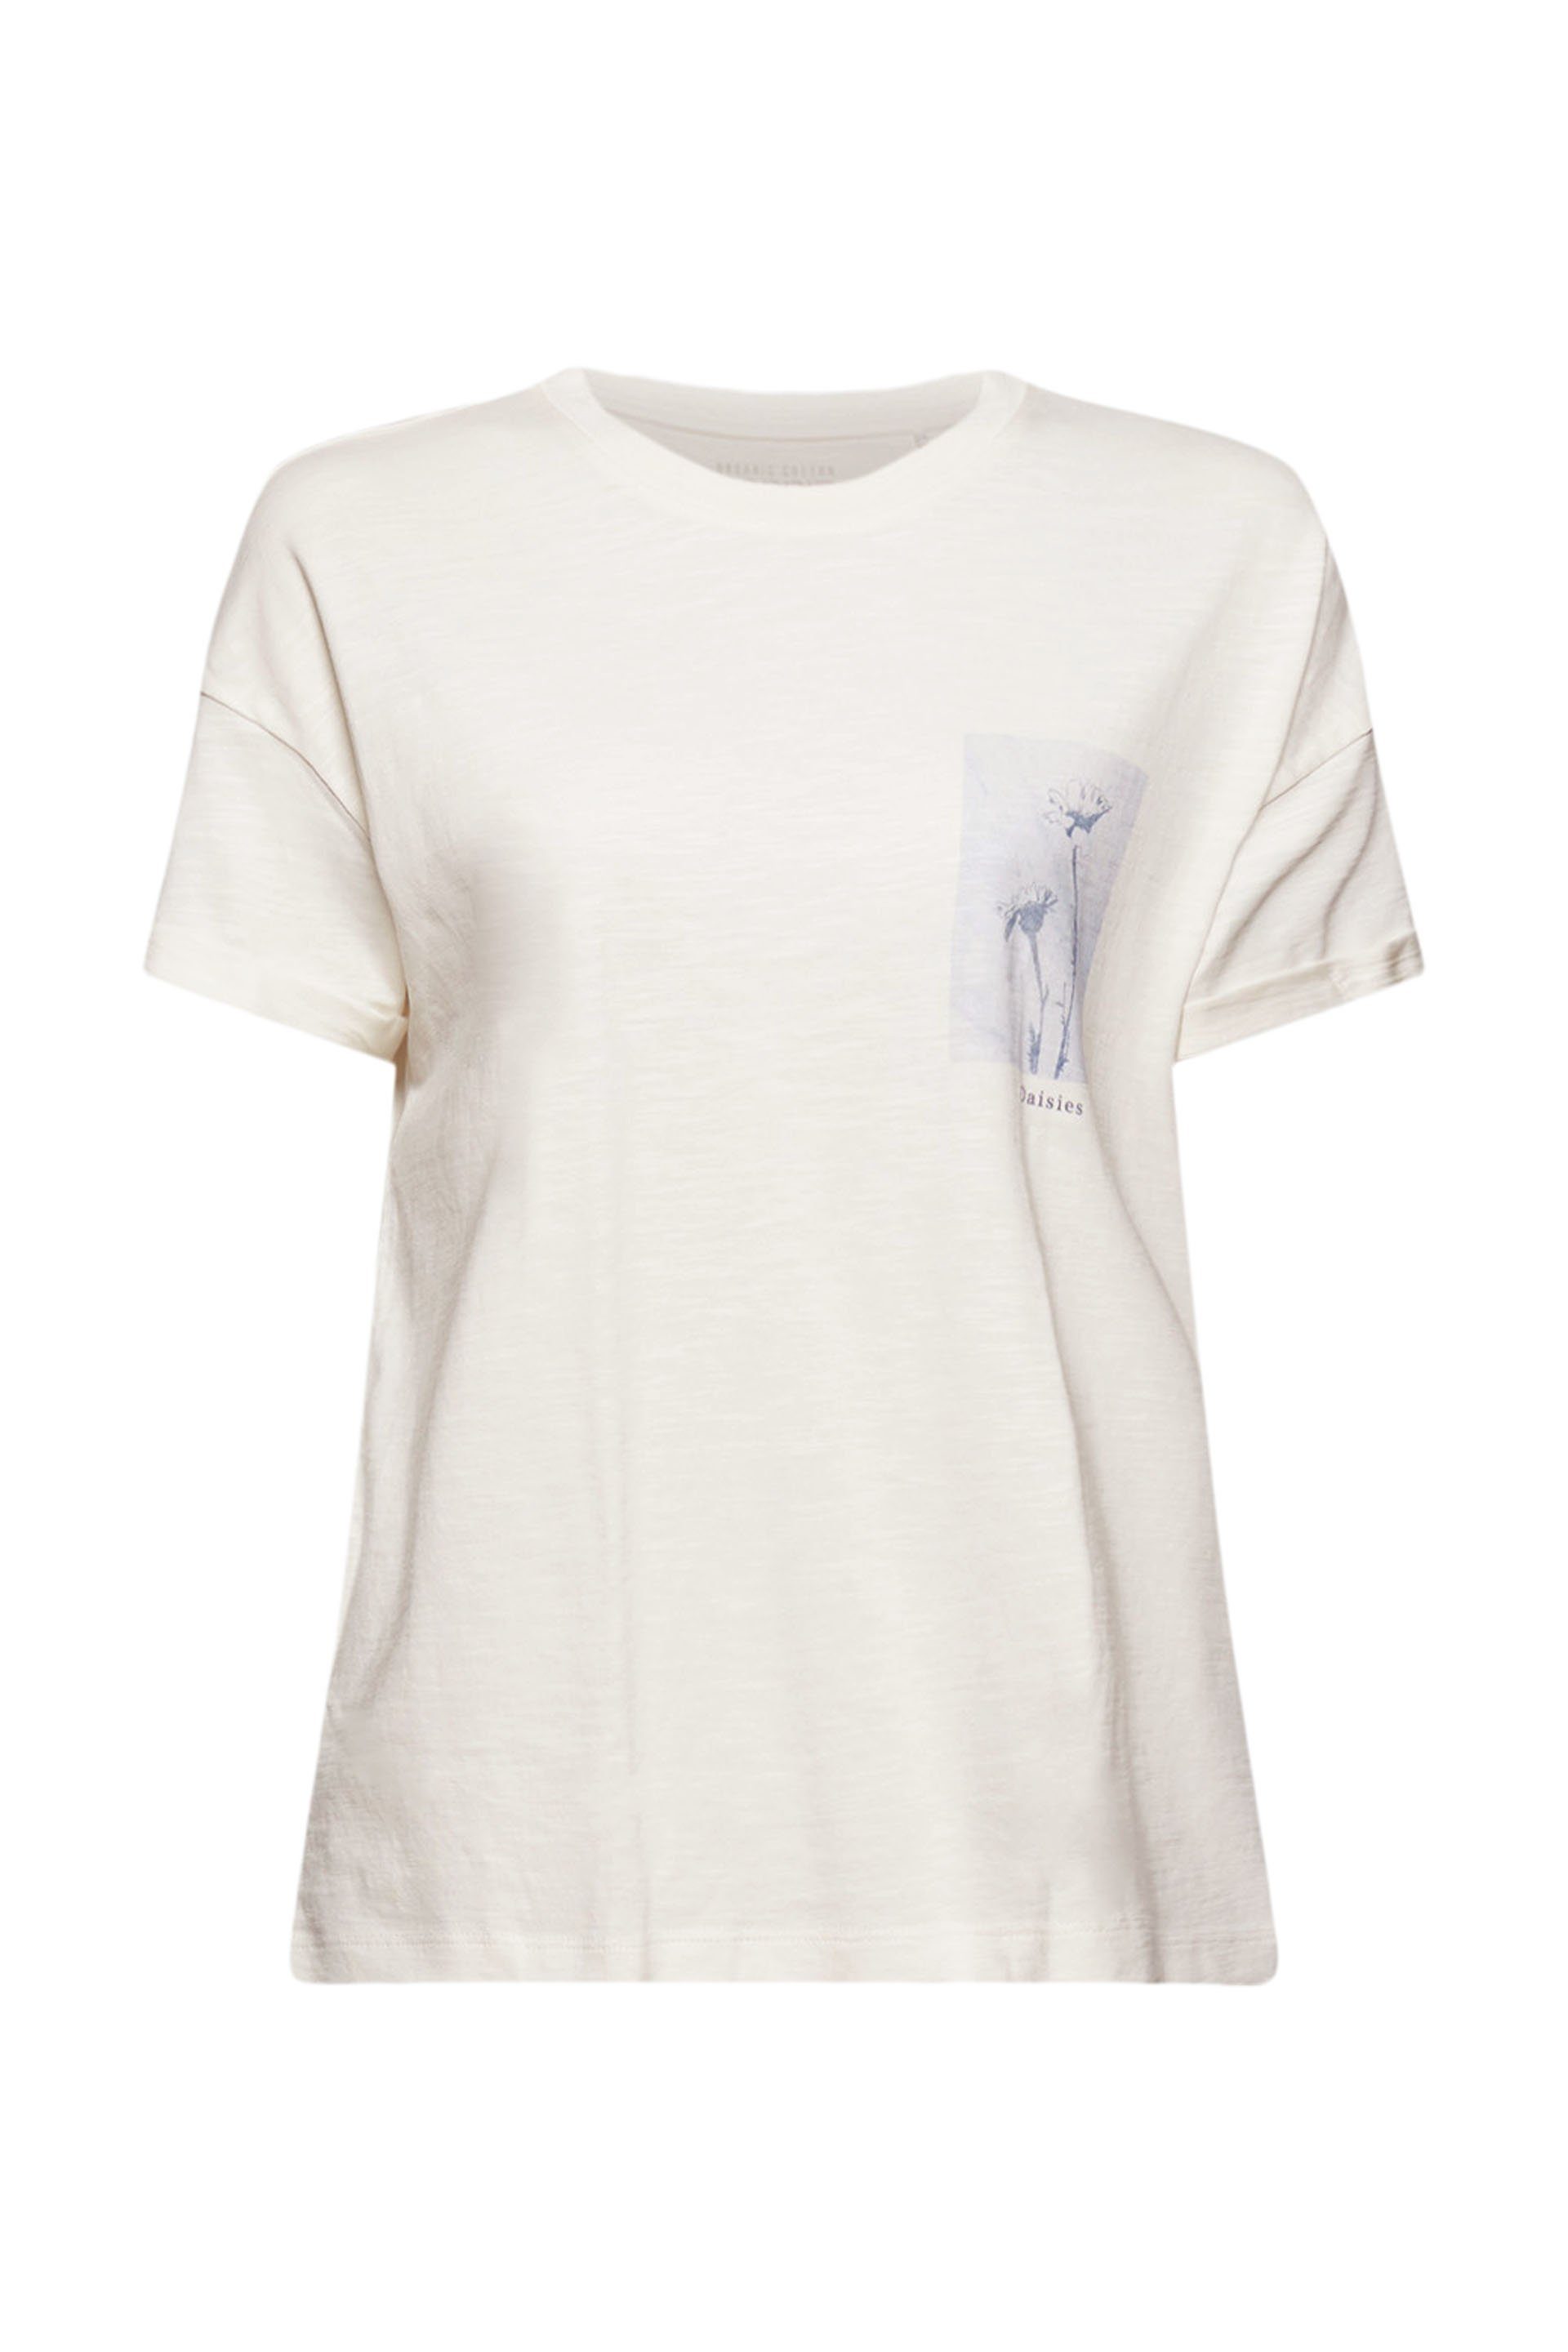 Esprit OFF WHITE 2 T-Shirt